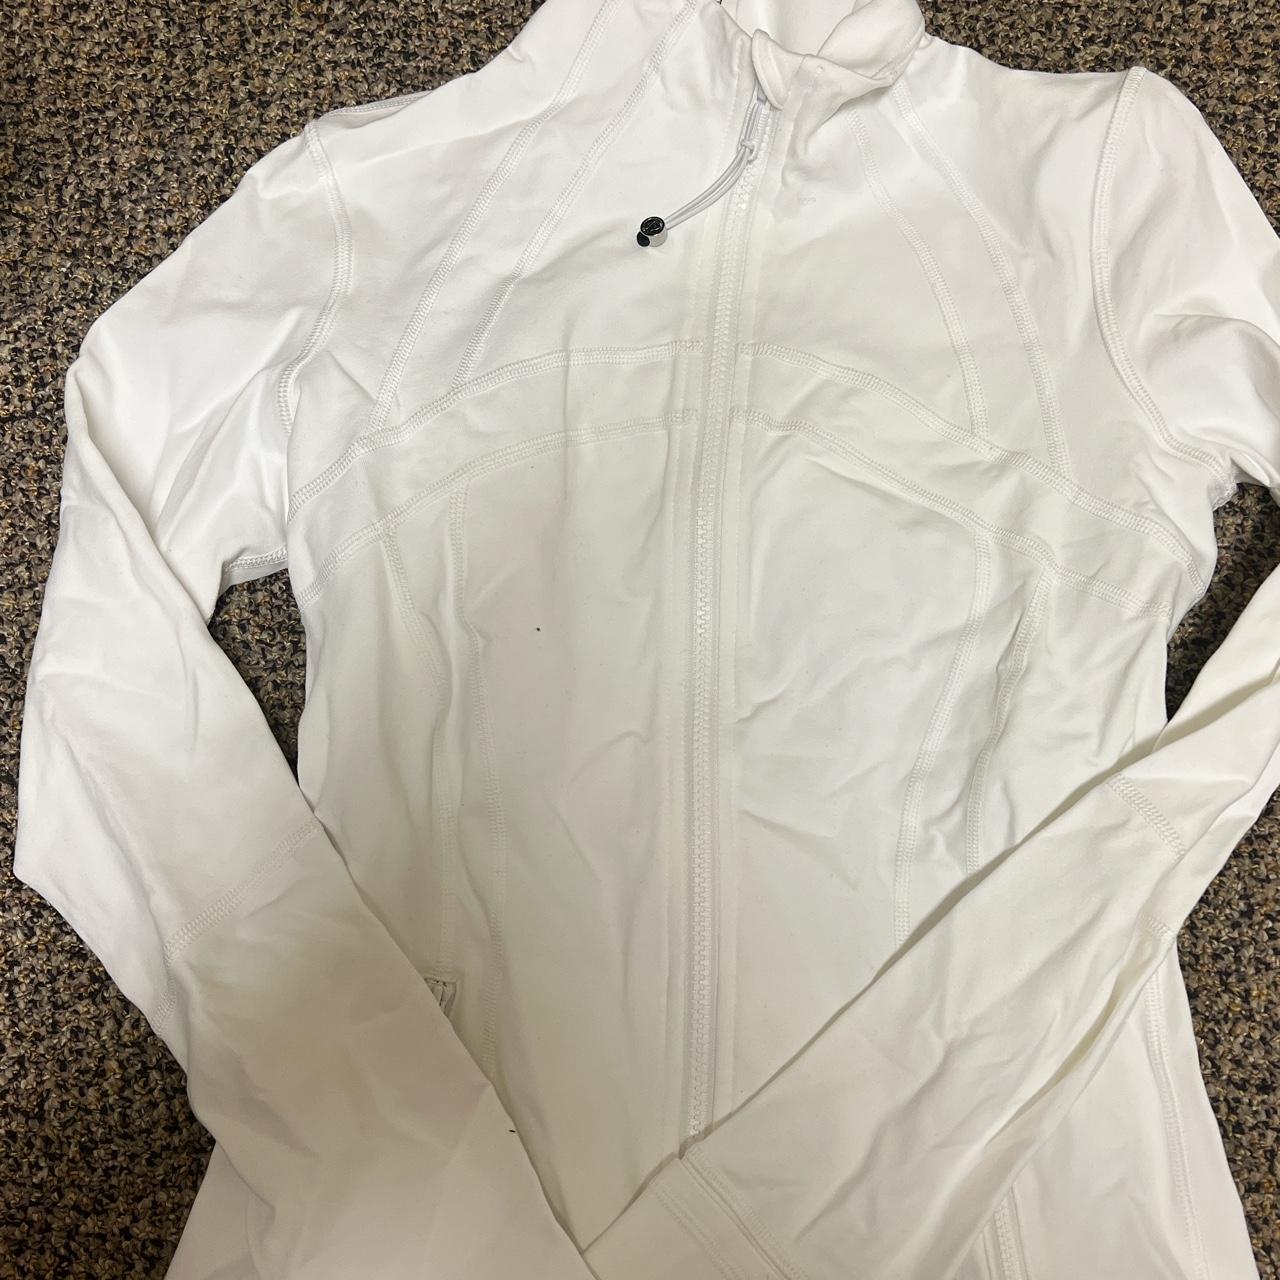 White Lululemon define jacket - Depop